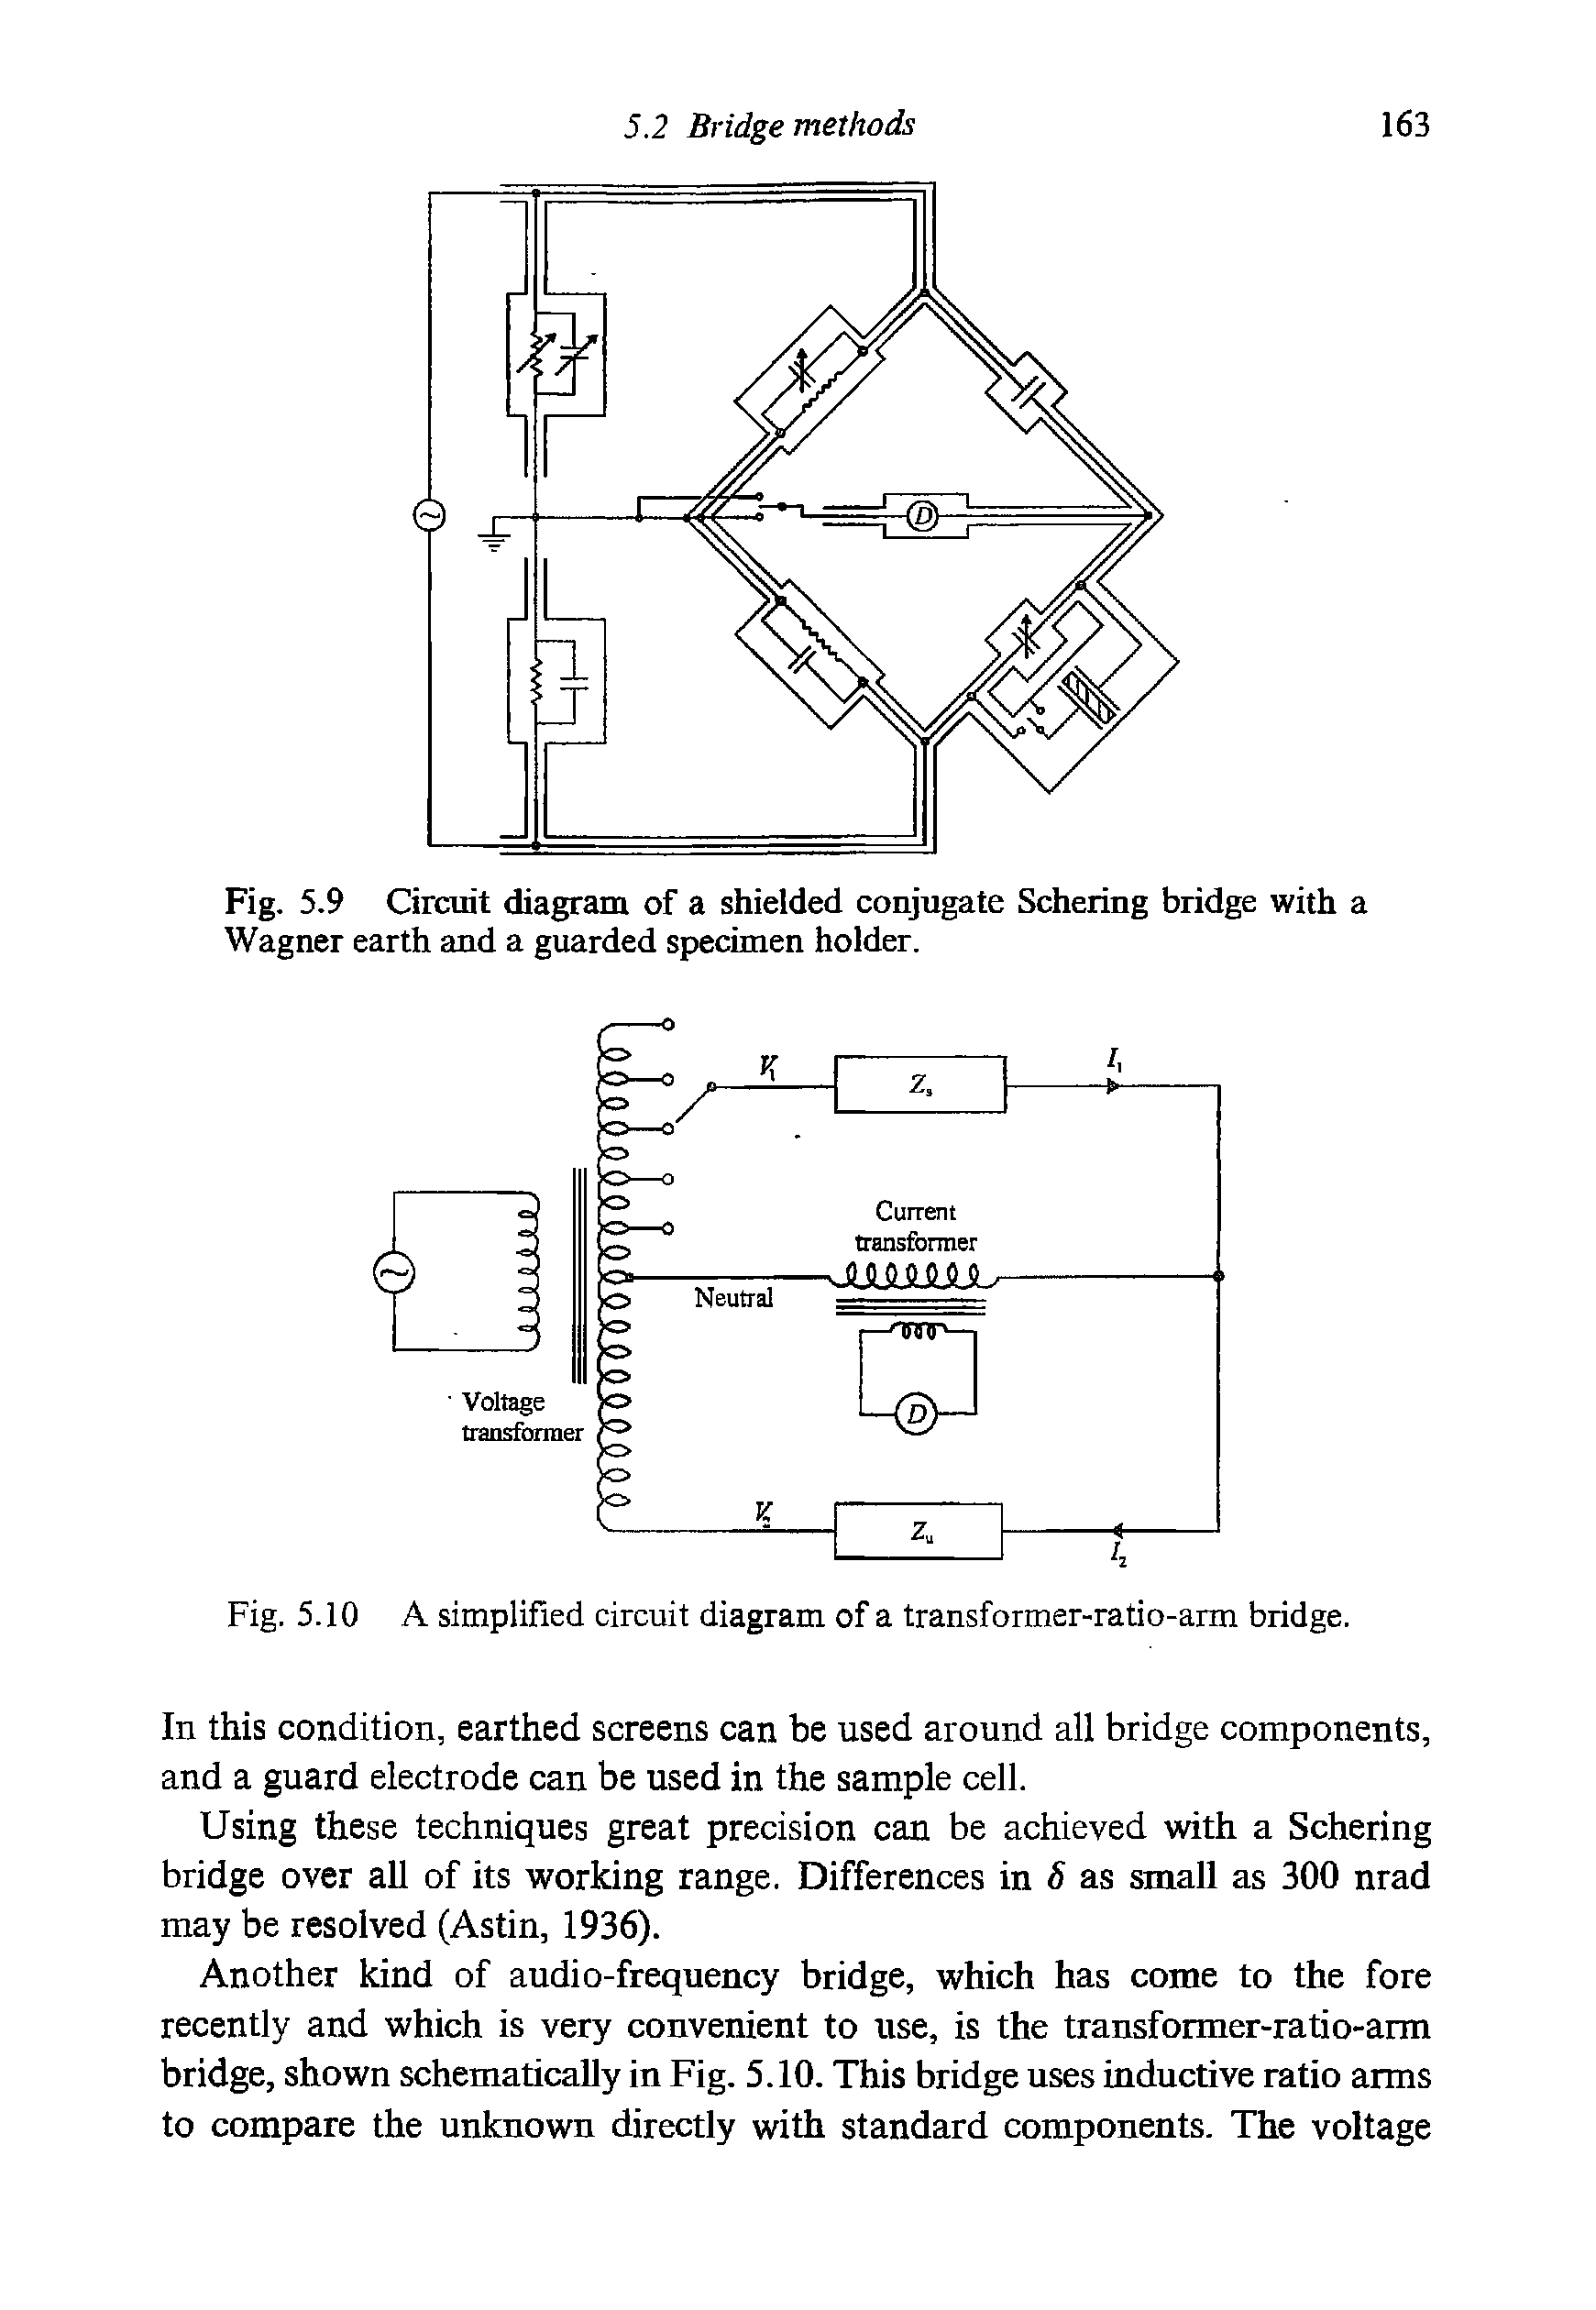 Fig. 5.10 A simplified circuit diagram of a transformer-ratio-arm bridge.